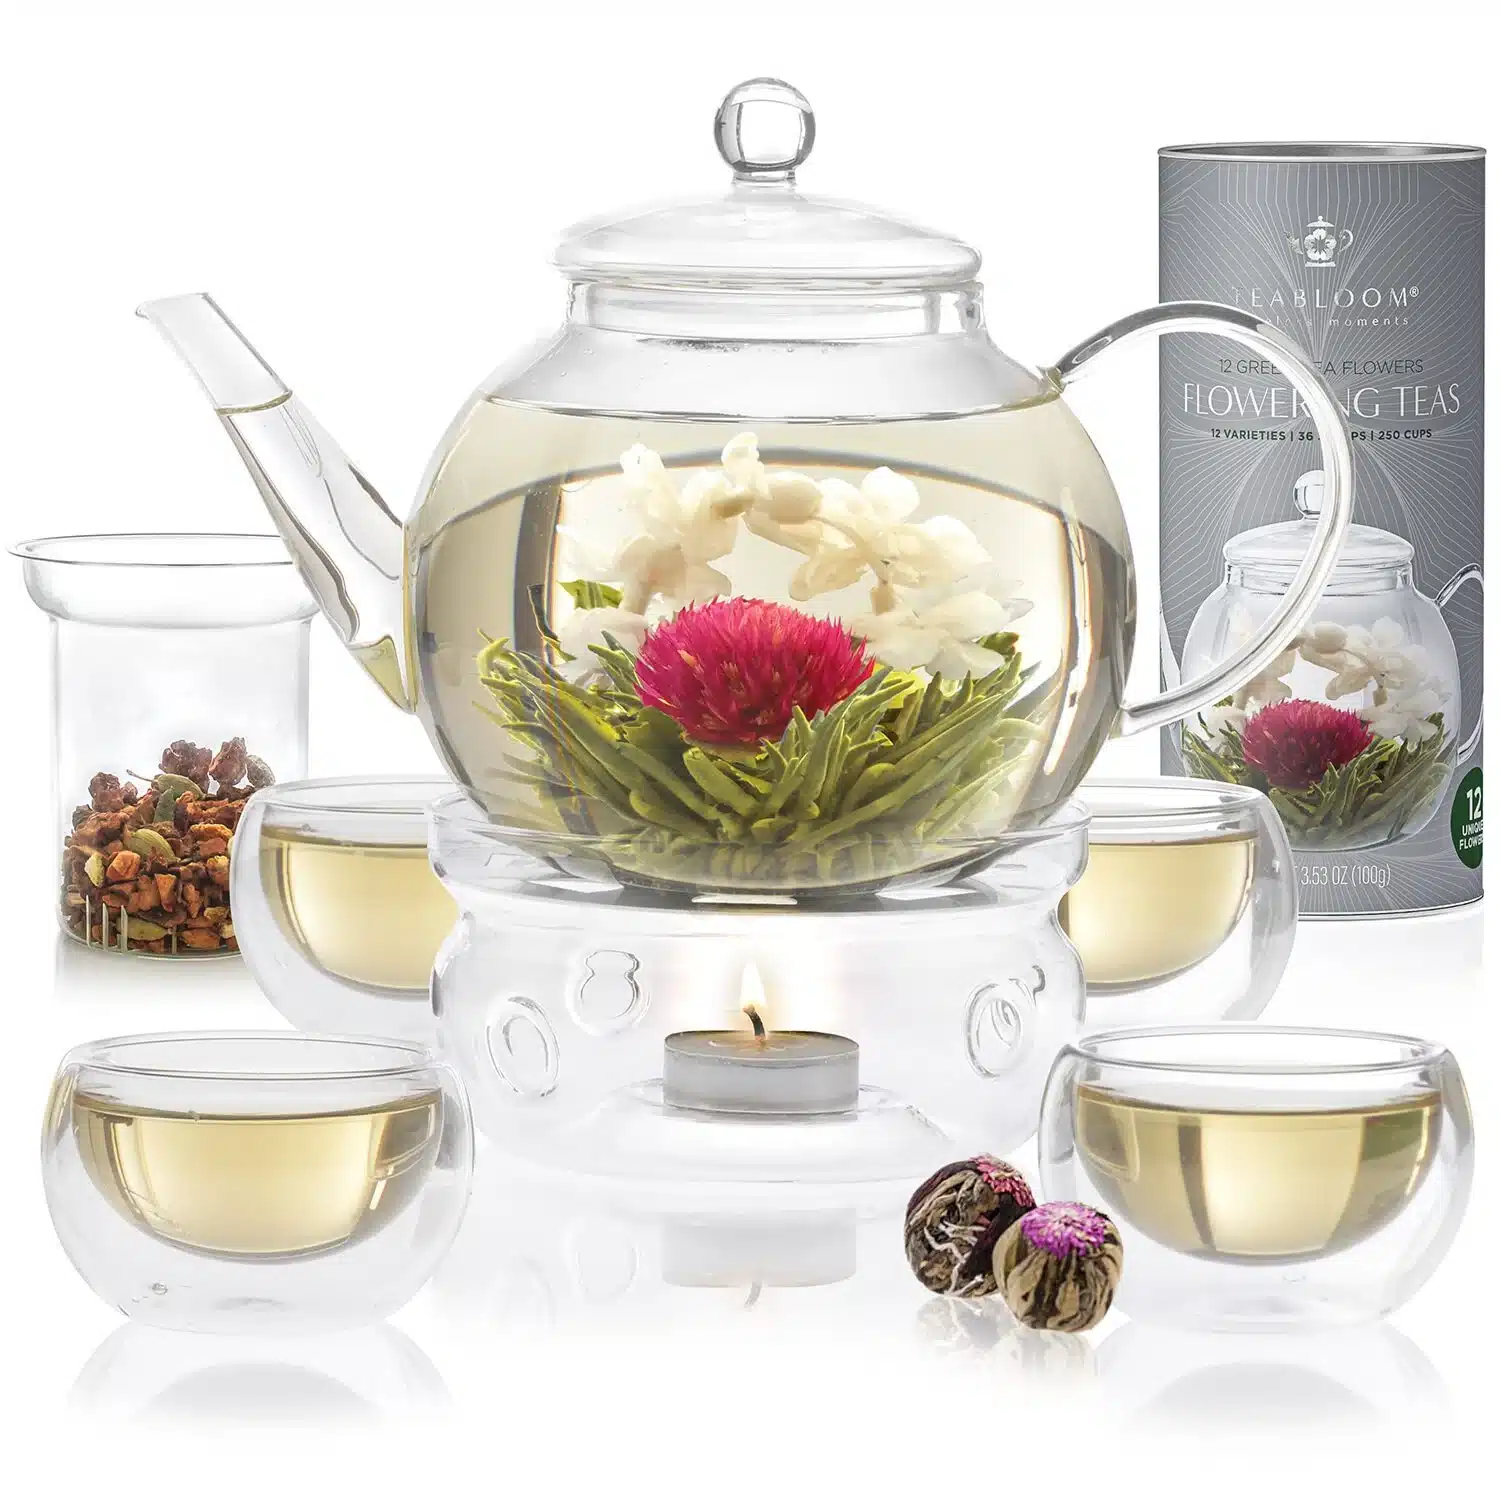 Blooming Tea gift set